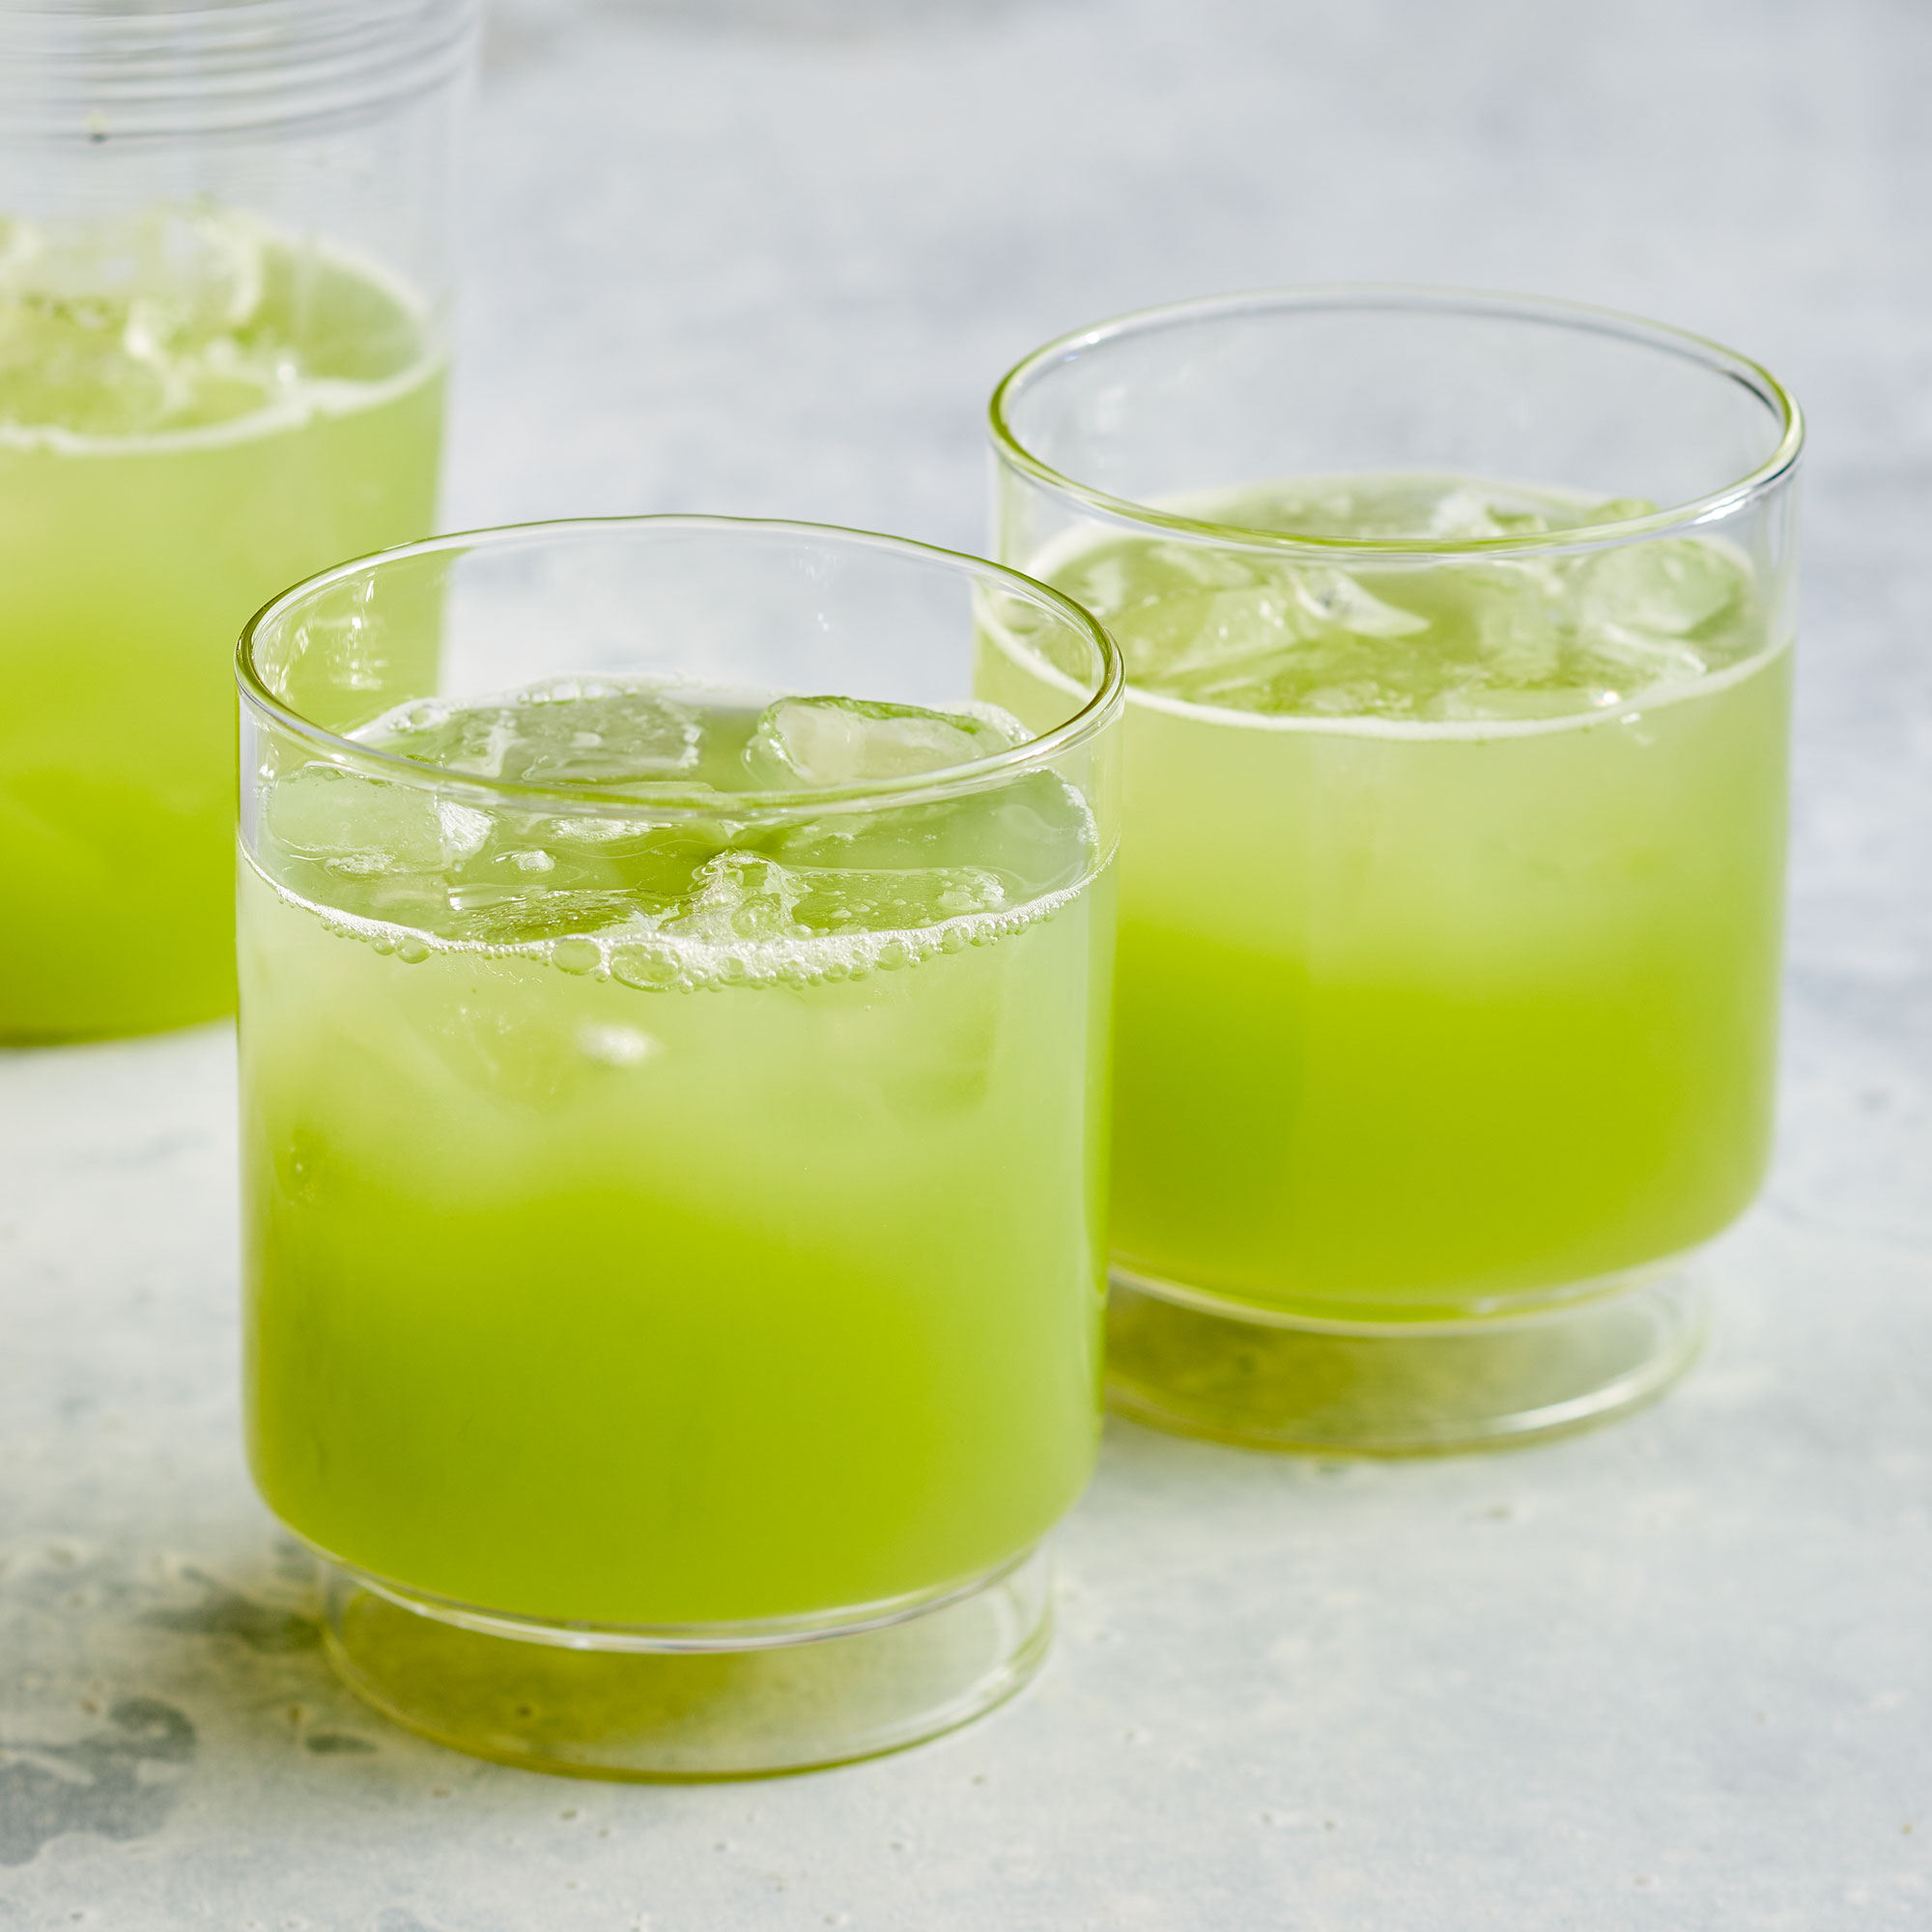 DIY Recipes: How to make Cucumber juice